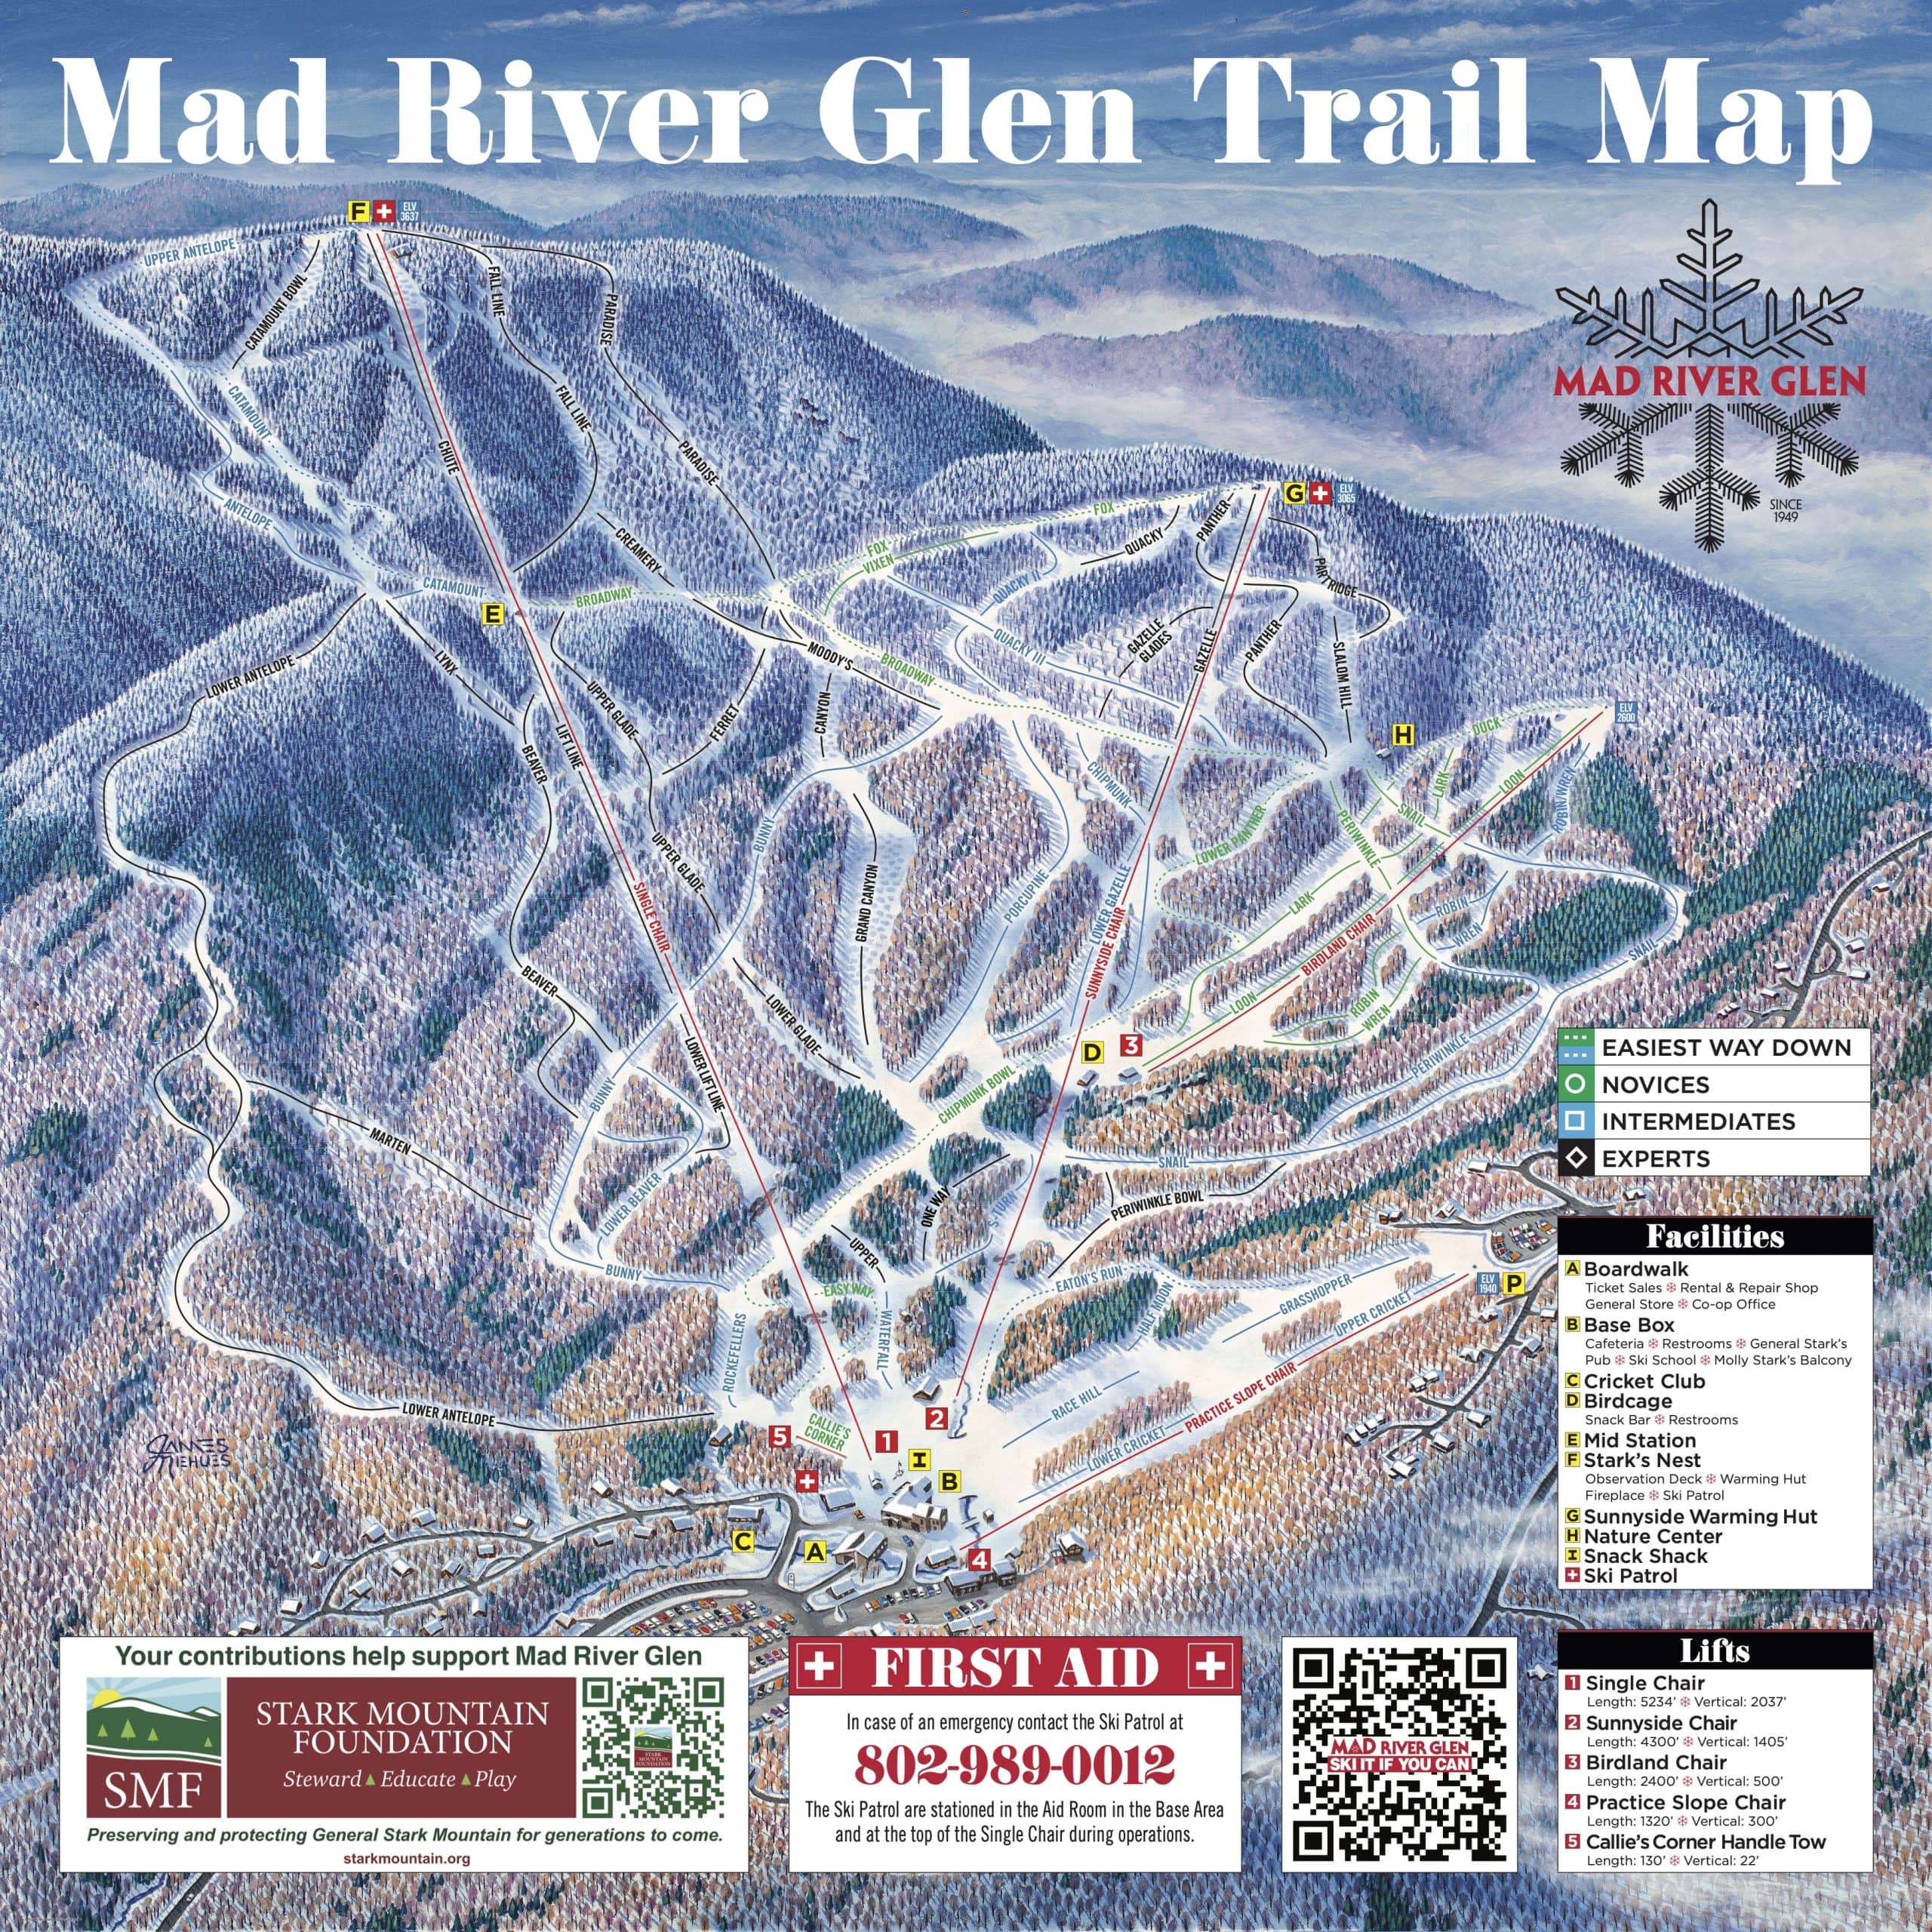 Trail Map of Mad River Glen Ski Resort